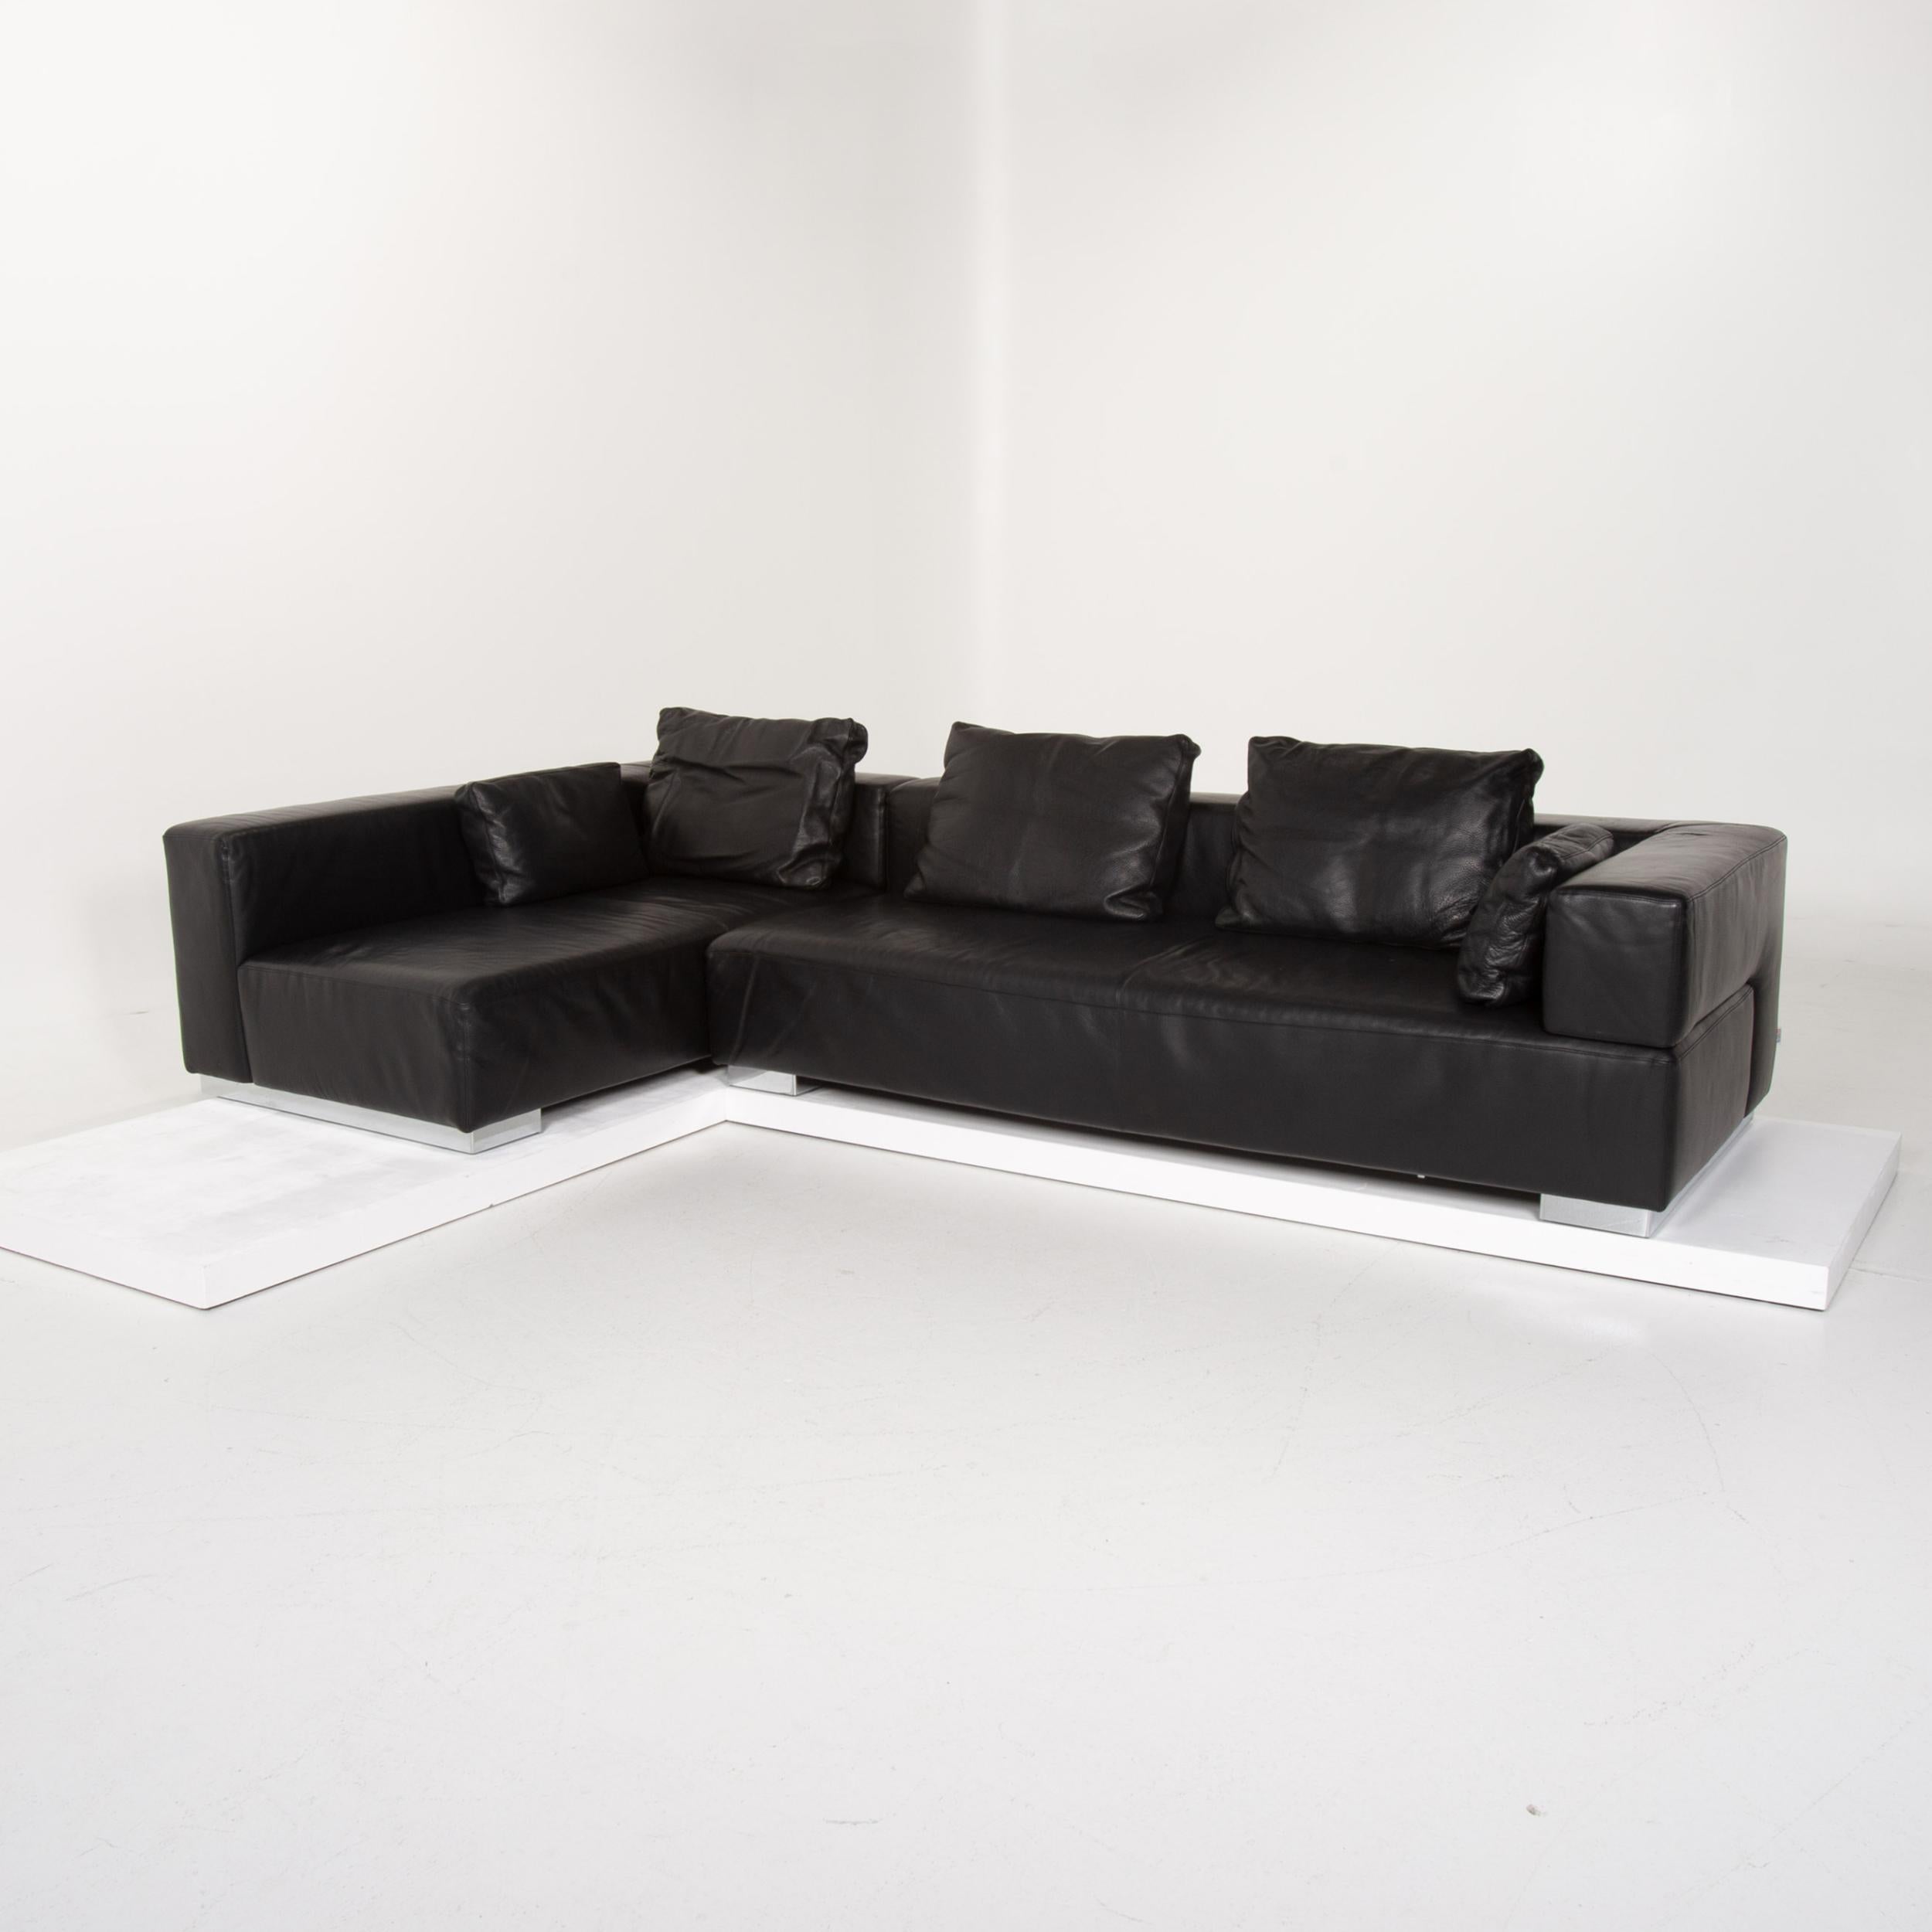 Brühl & Sippold Leather Sofa Black Corner Sofa In Good Condition For Sale In Cologne, DE